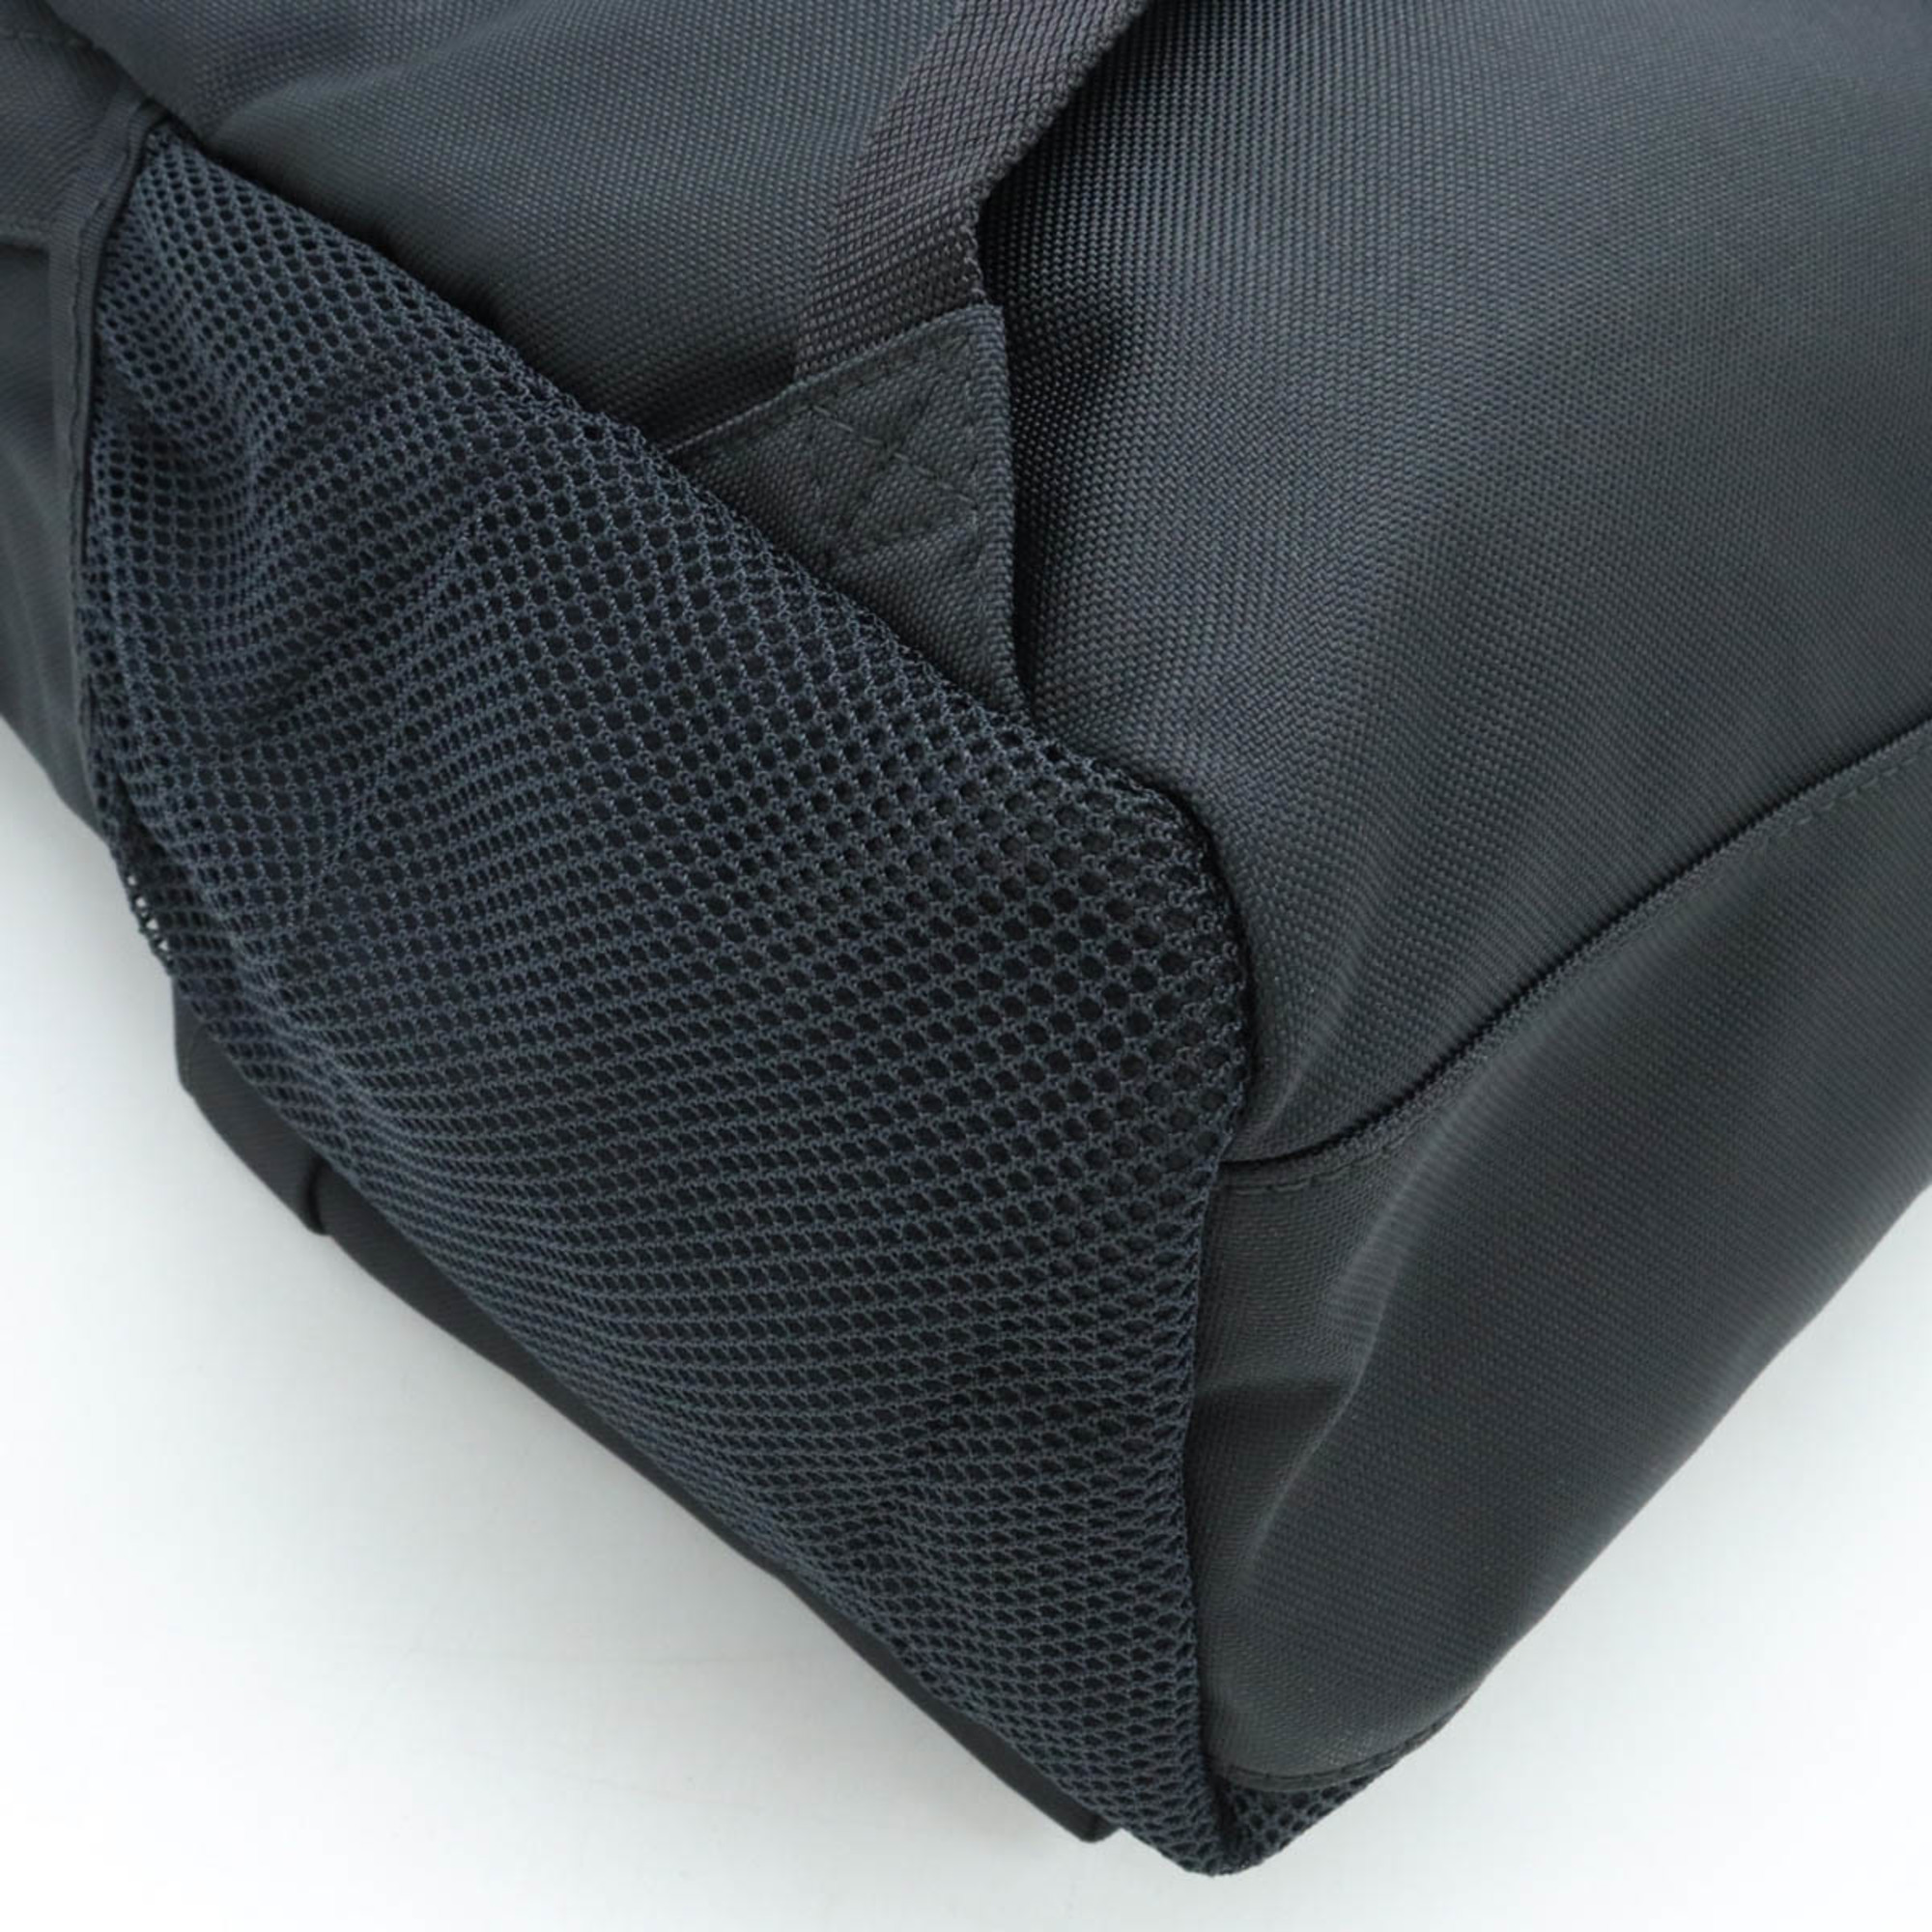 BALENCIAGA CREW Backpack, nylon canvas, black, white, 617763